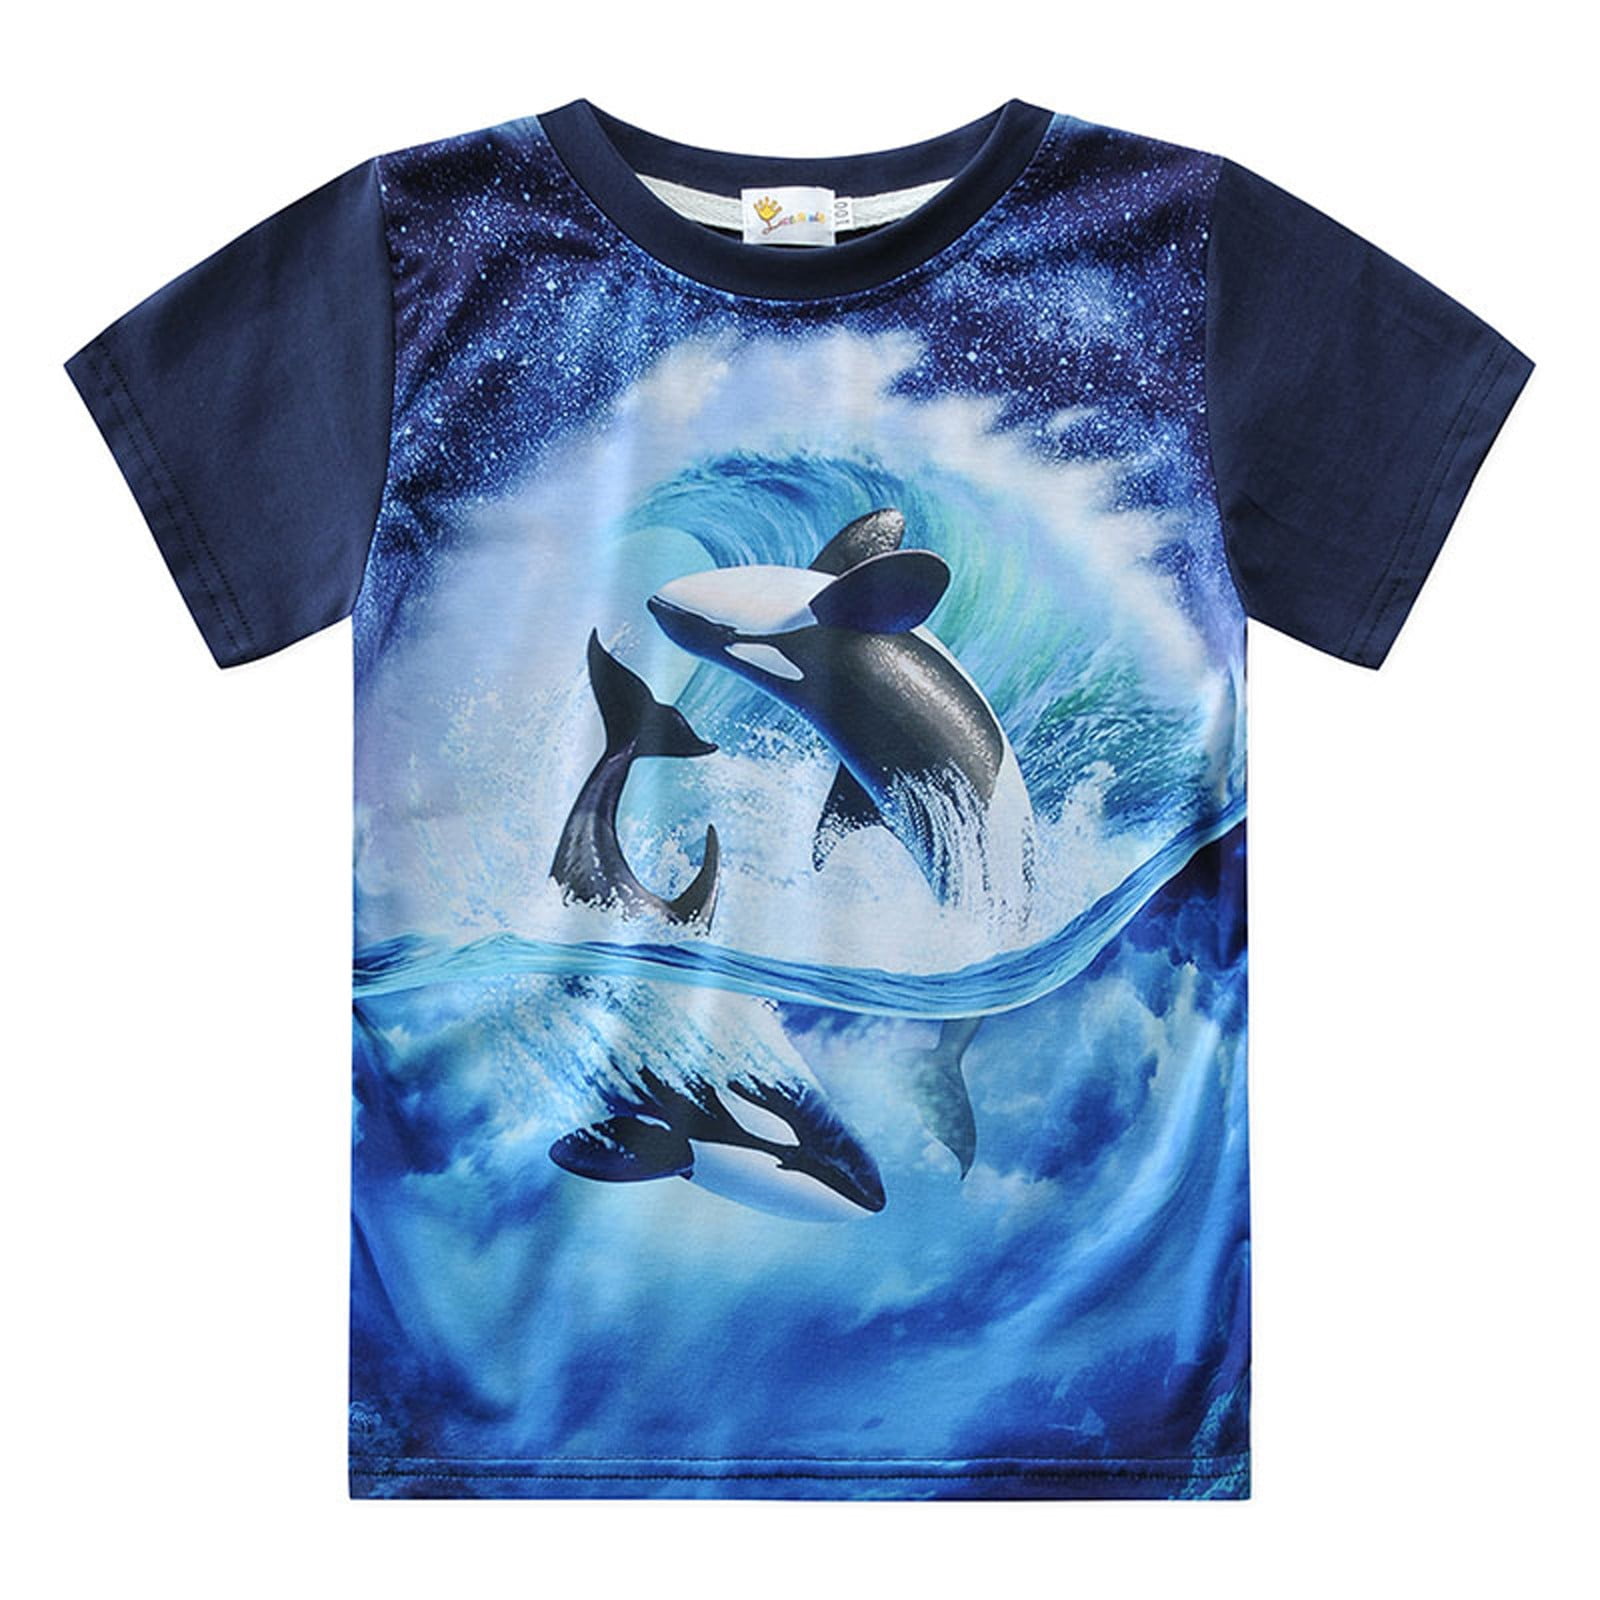 Fashion Cotton Soft Baby Boys Tops Cartoon Dolphin Printing Animal T shirts Toddler Kids O neck